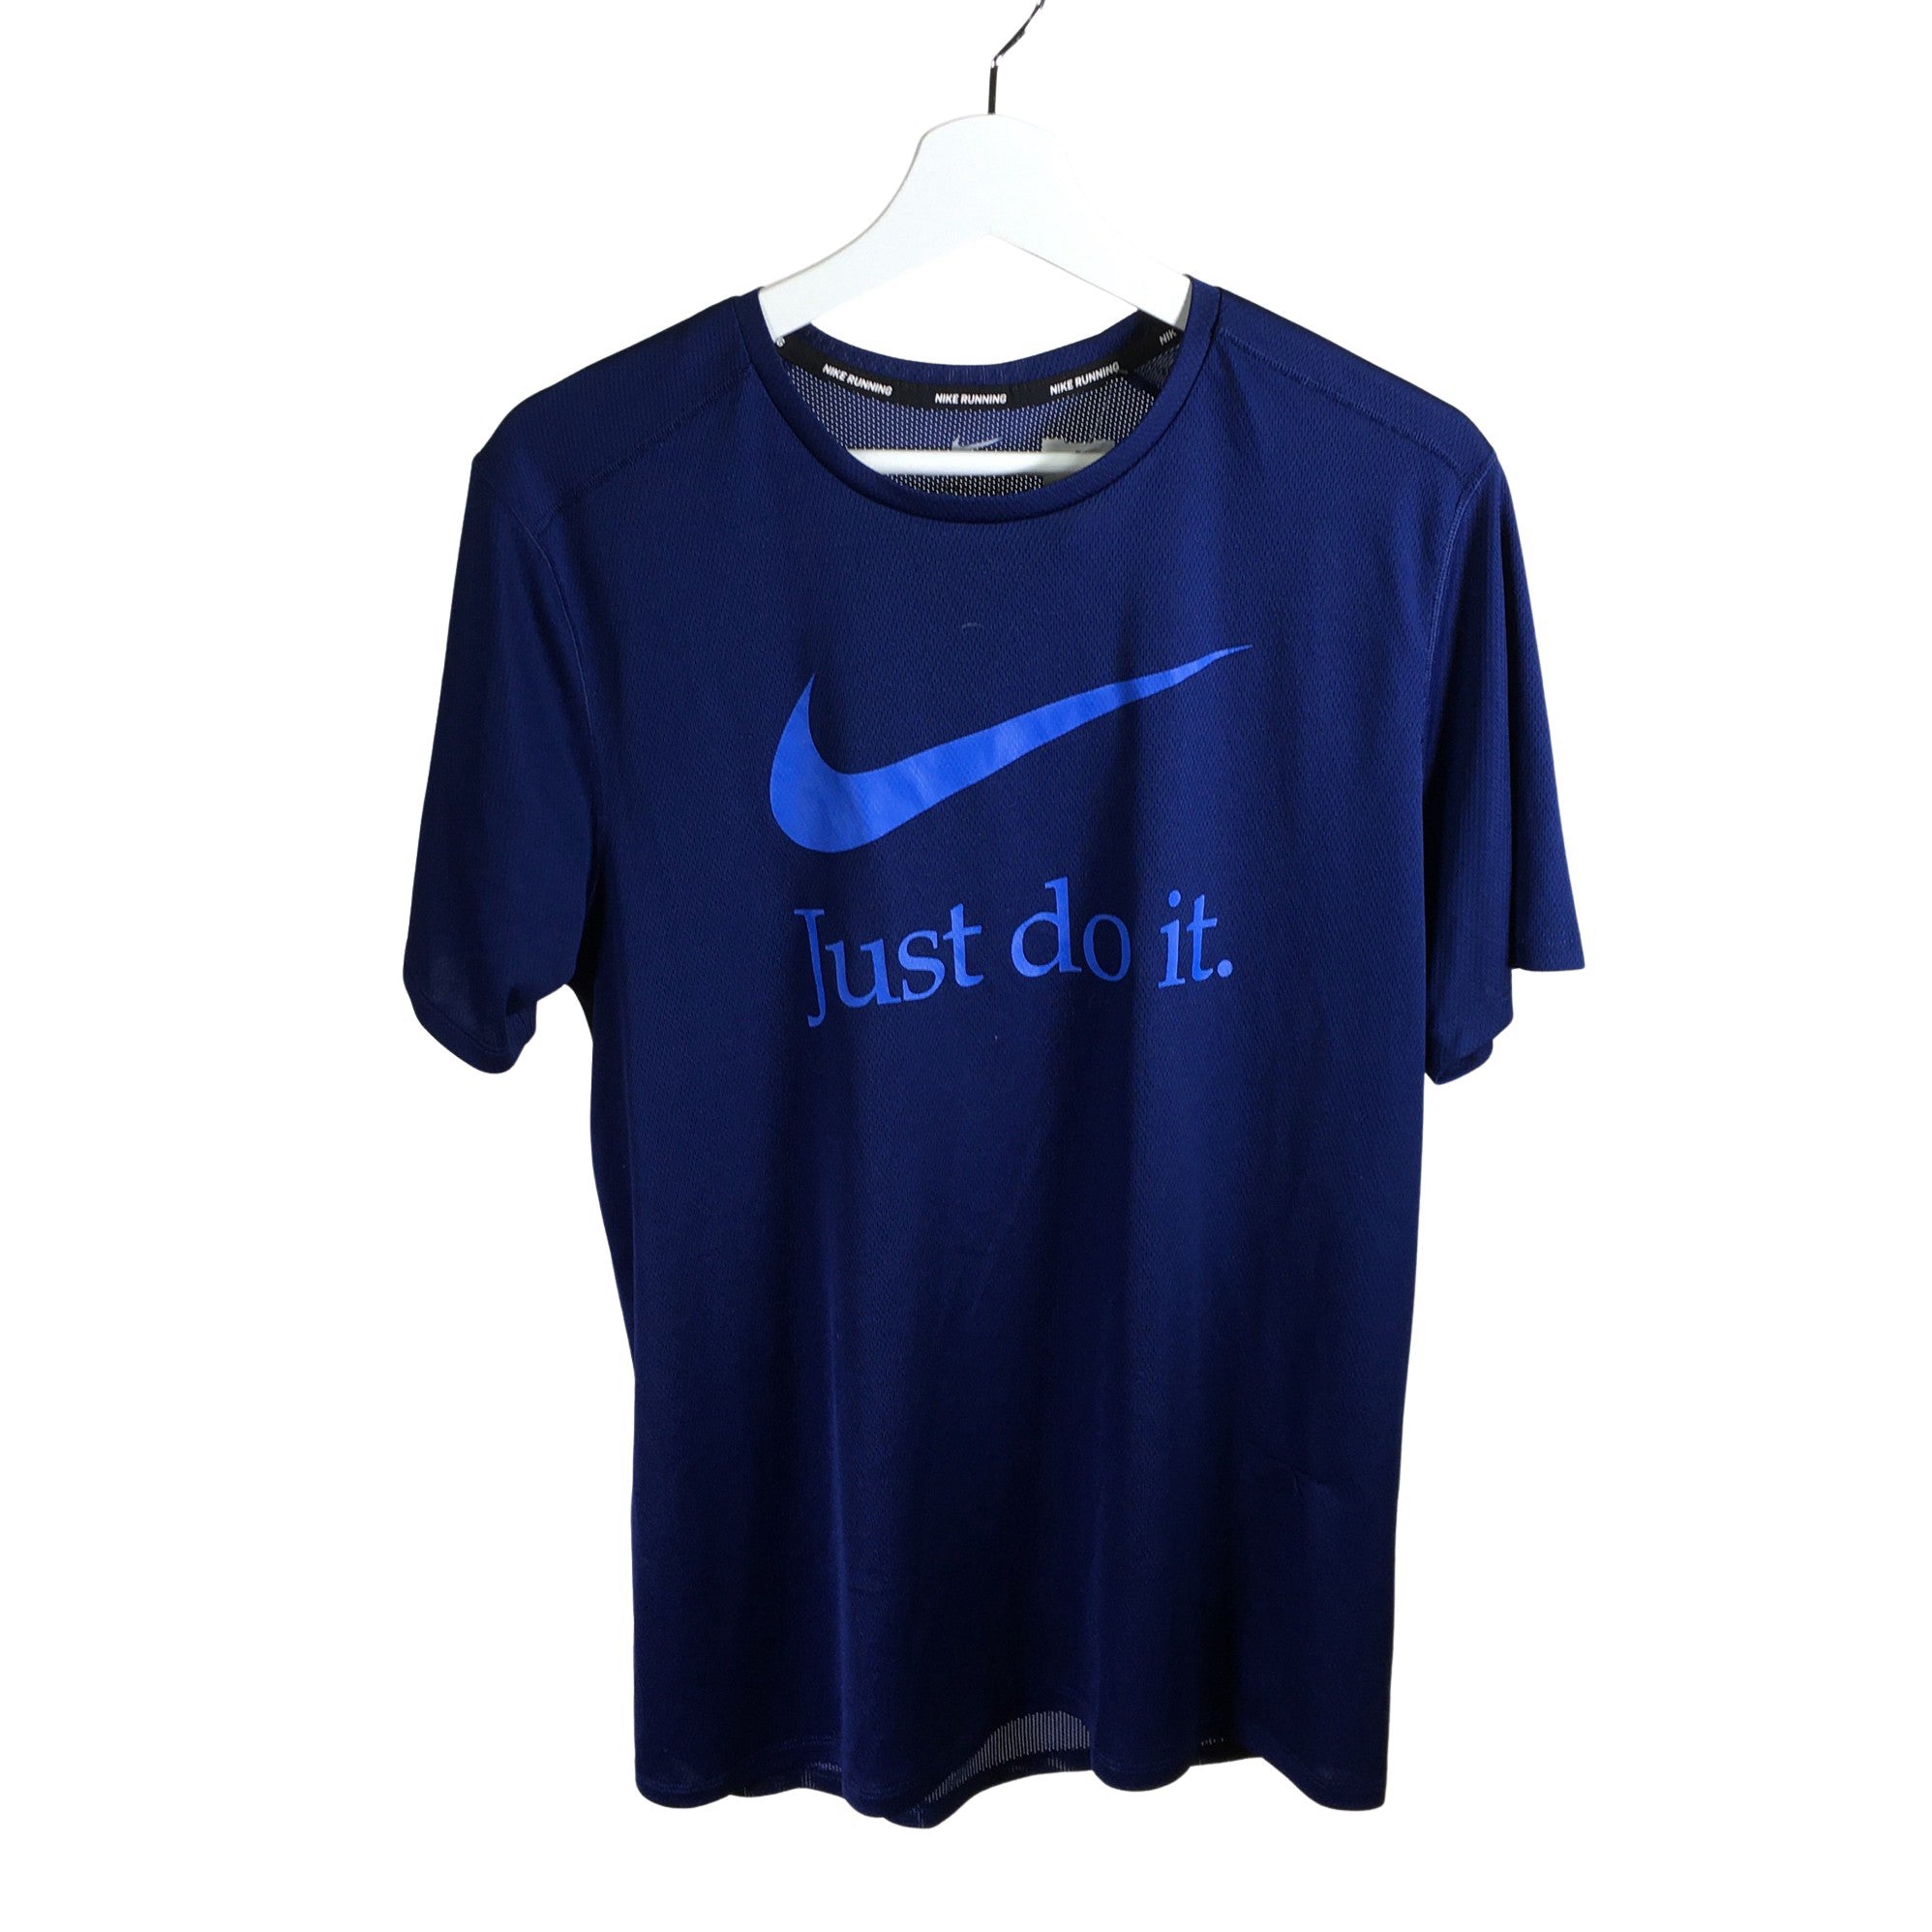 Viool knelpunt Alert Men's Nike Sports shirt, lyhyet hihat, size M (Blue) | Emmy